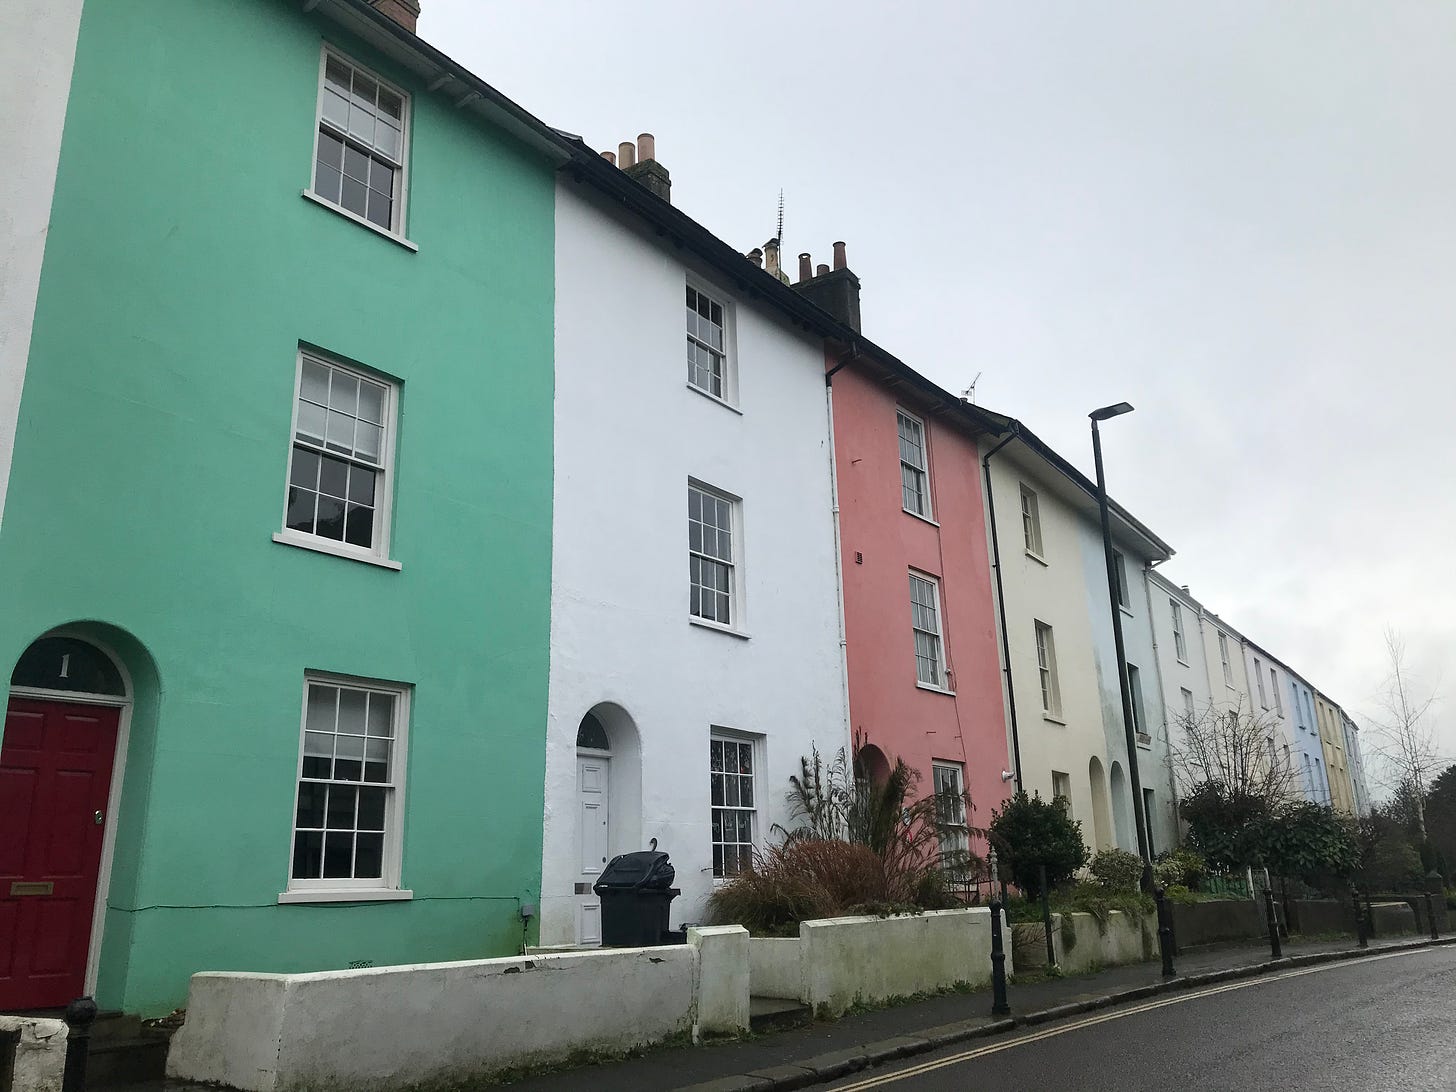 A row of pastel coloured houses in Totnes, Devon